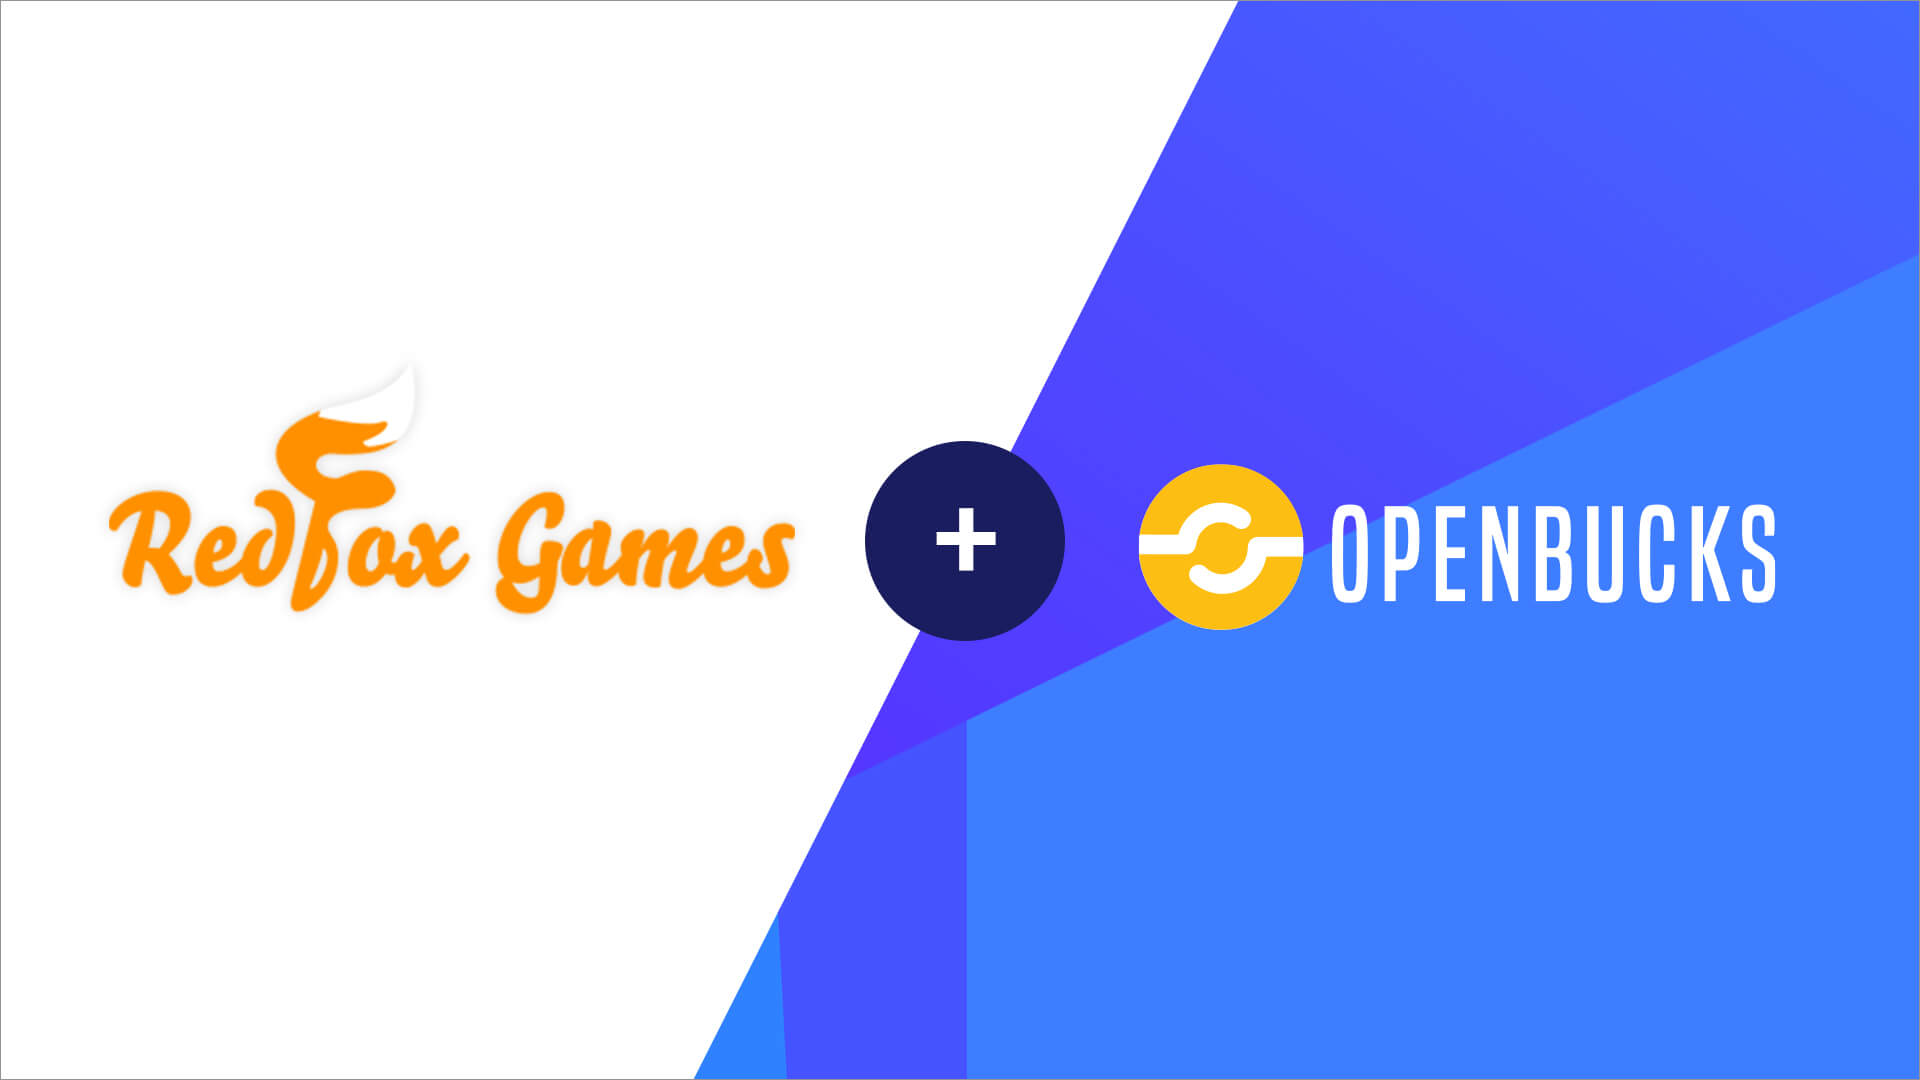 Pay with gift cards on RedFox Games via Openbucks redfox.jpg